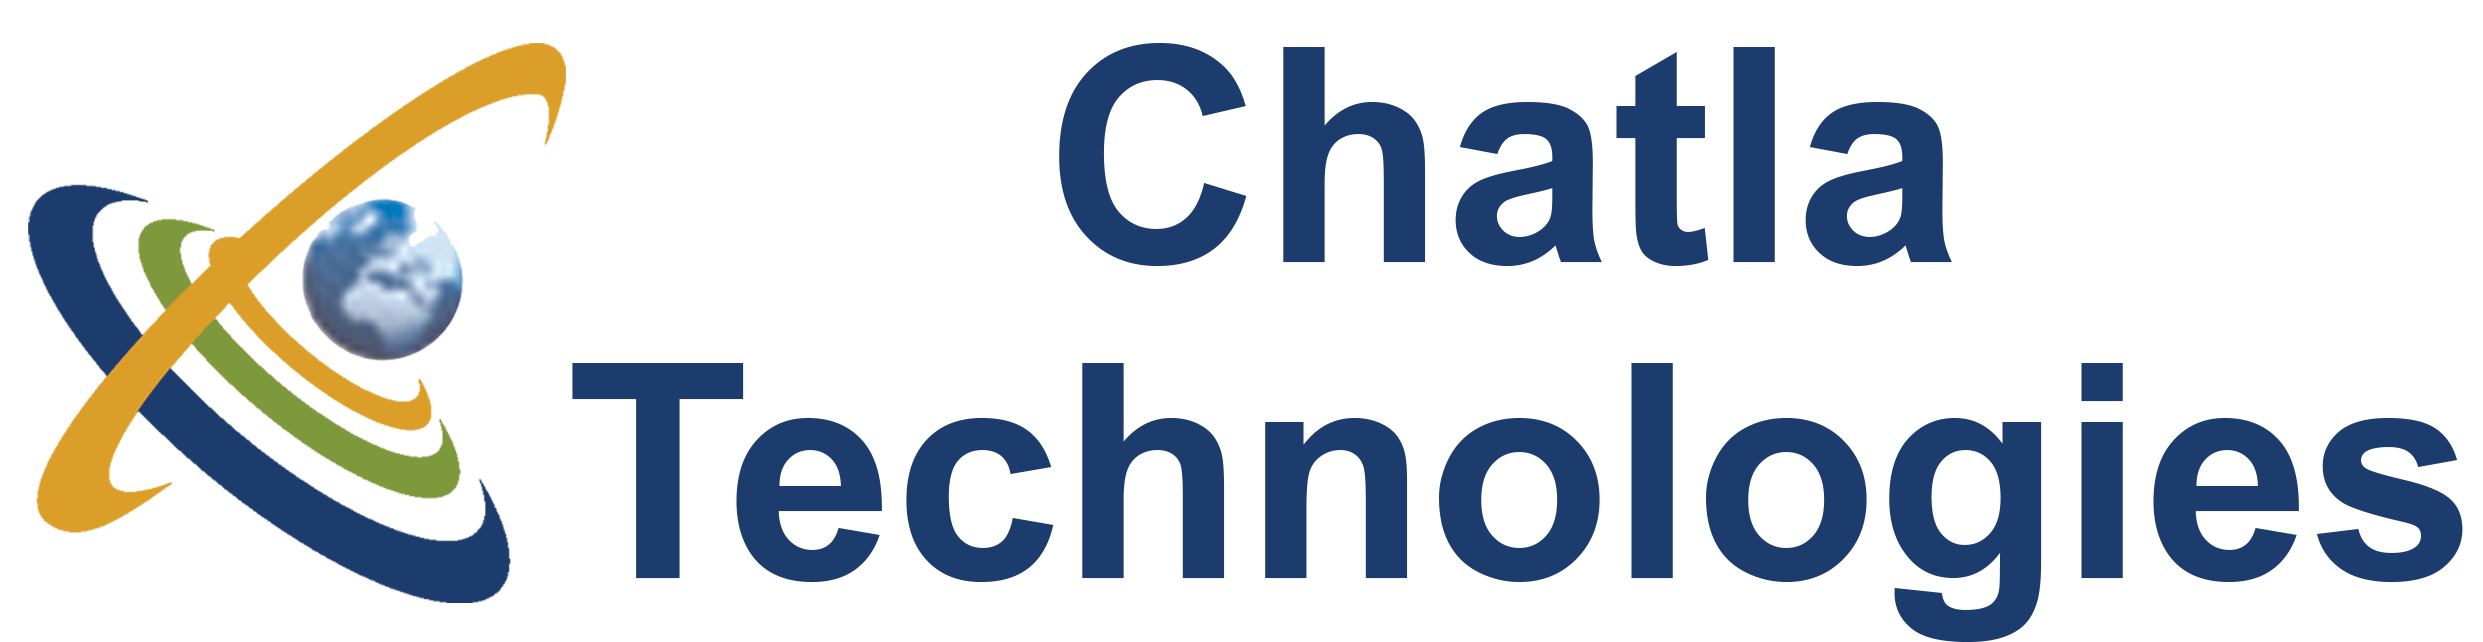 Chatla Technologies